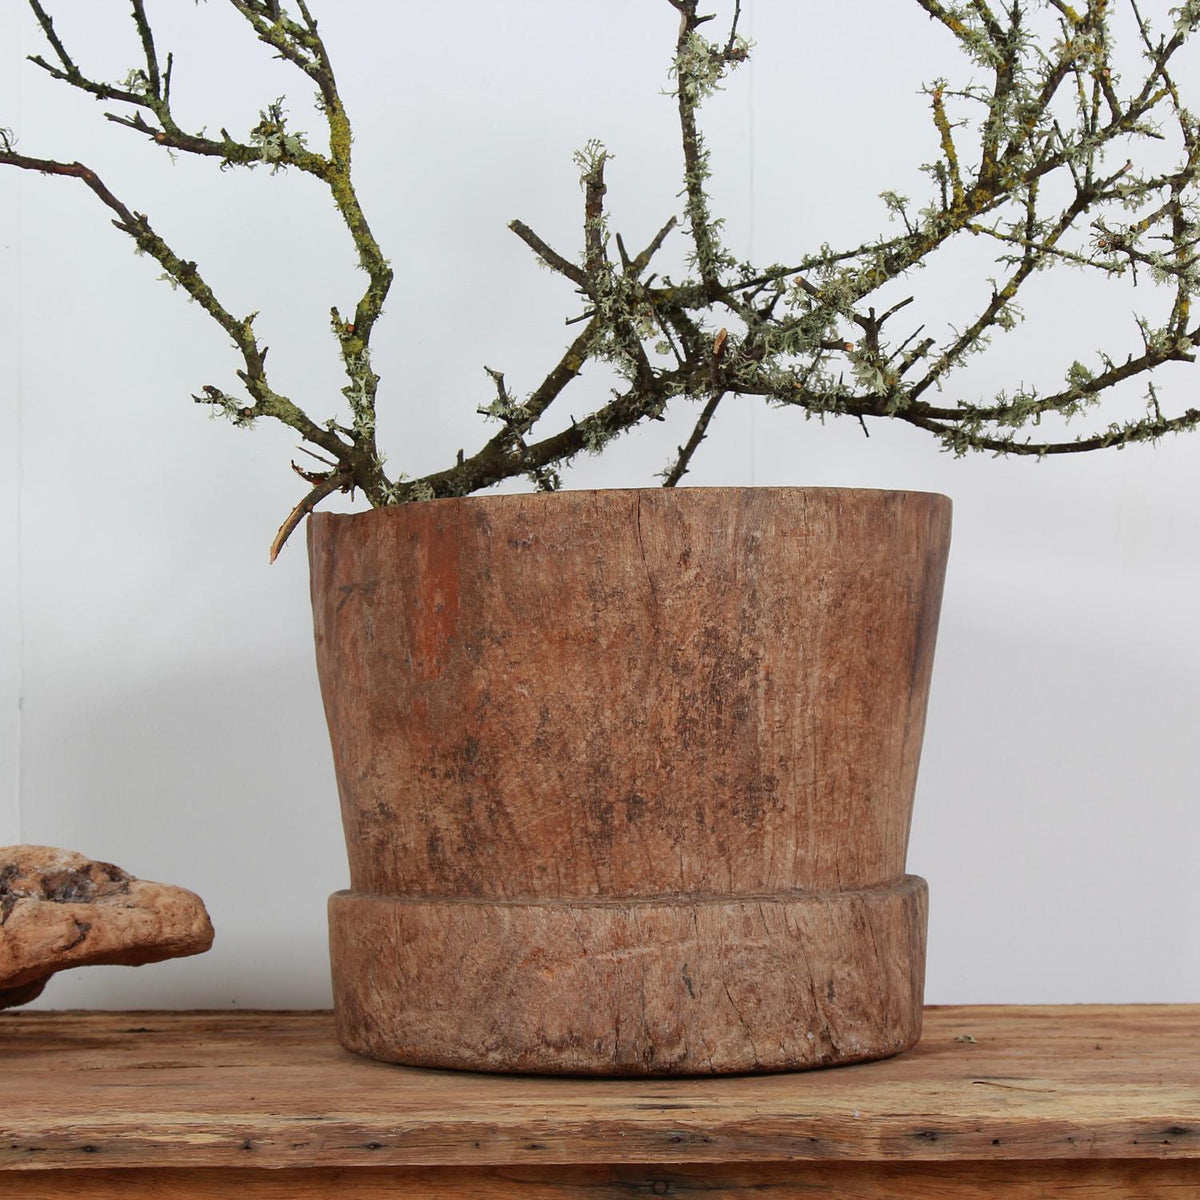 Antique Rustic Wooden Dugout Tree Trunk Planter/Mortar